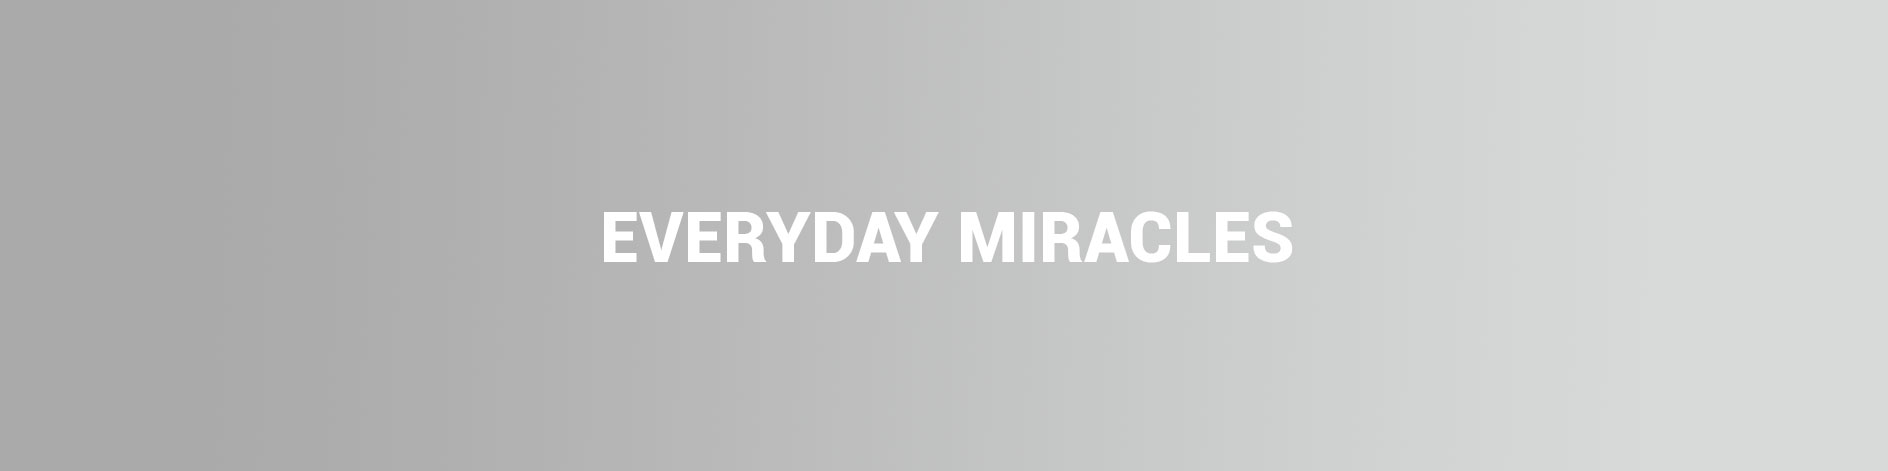 DIAD_everyday-miracles-gray